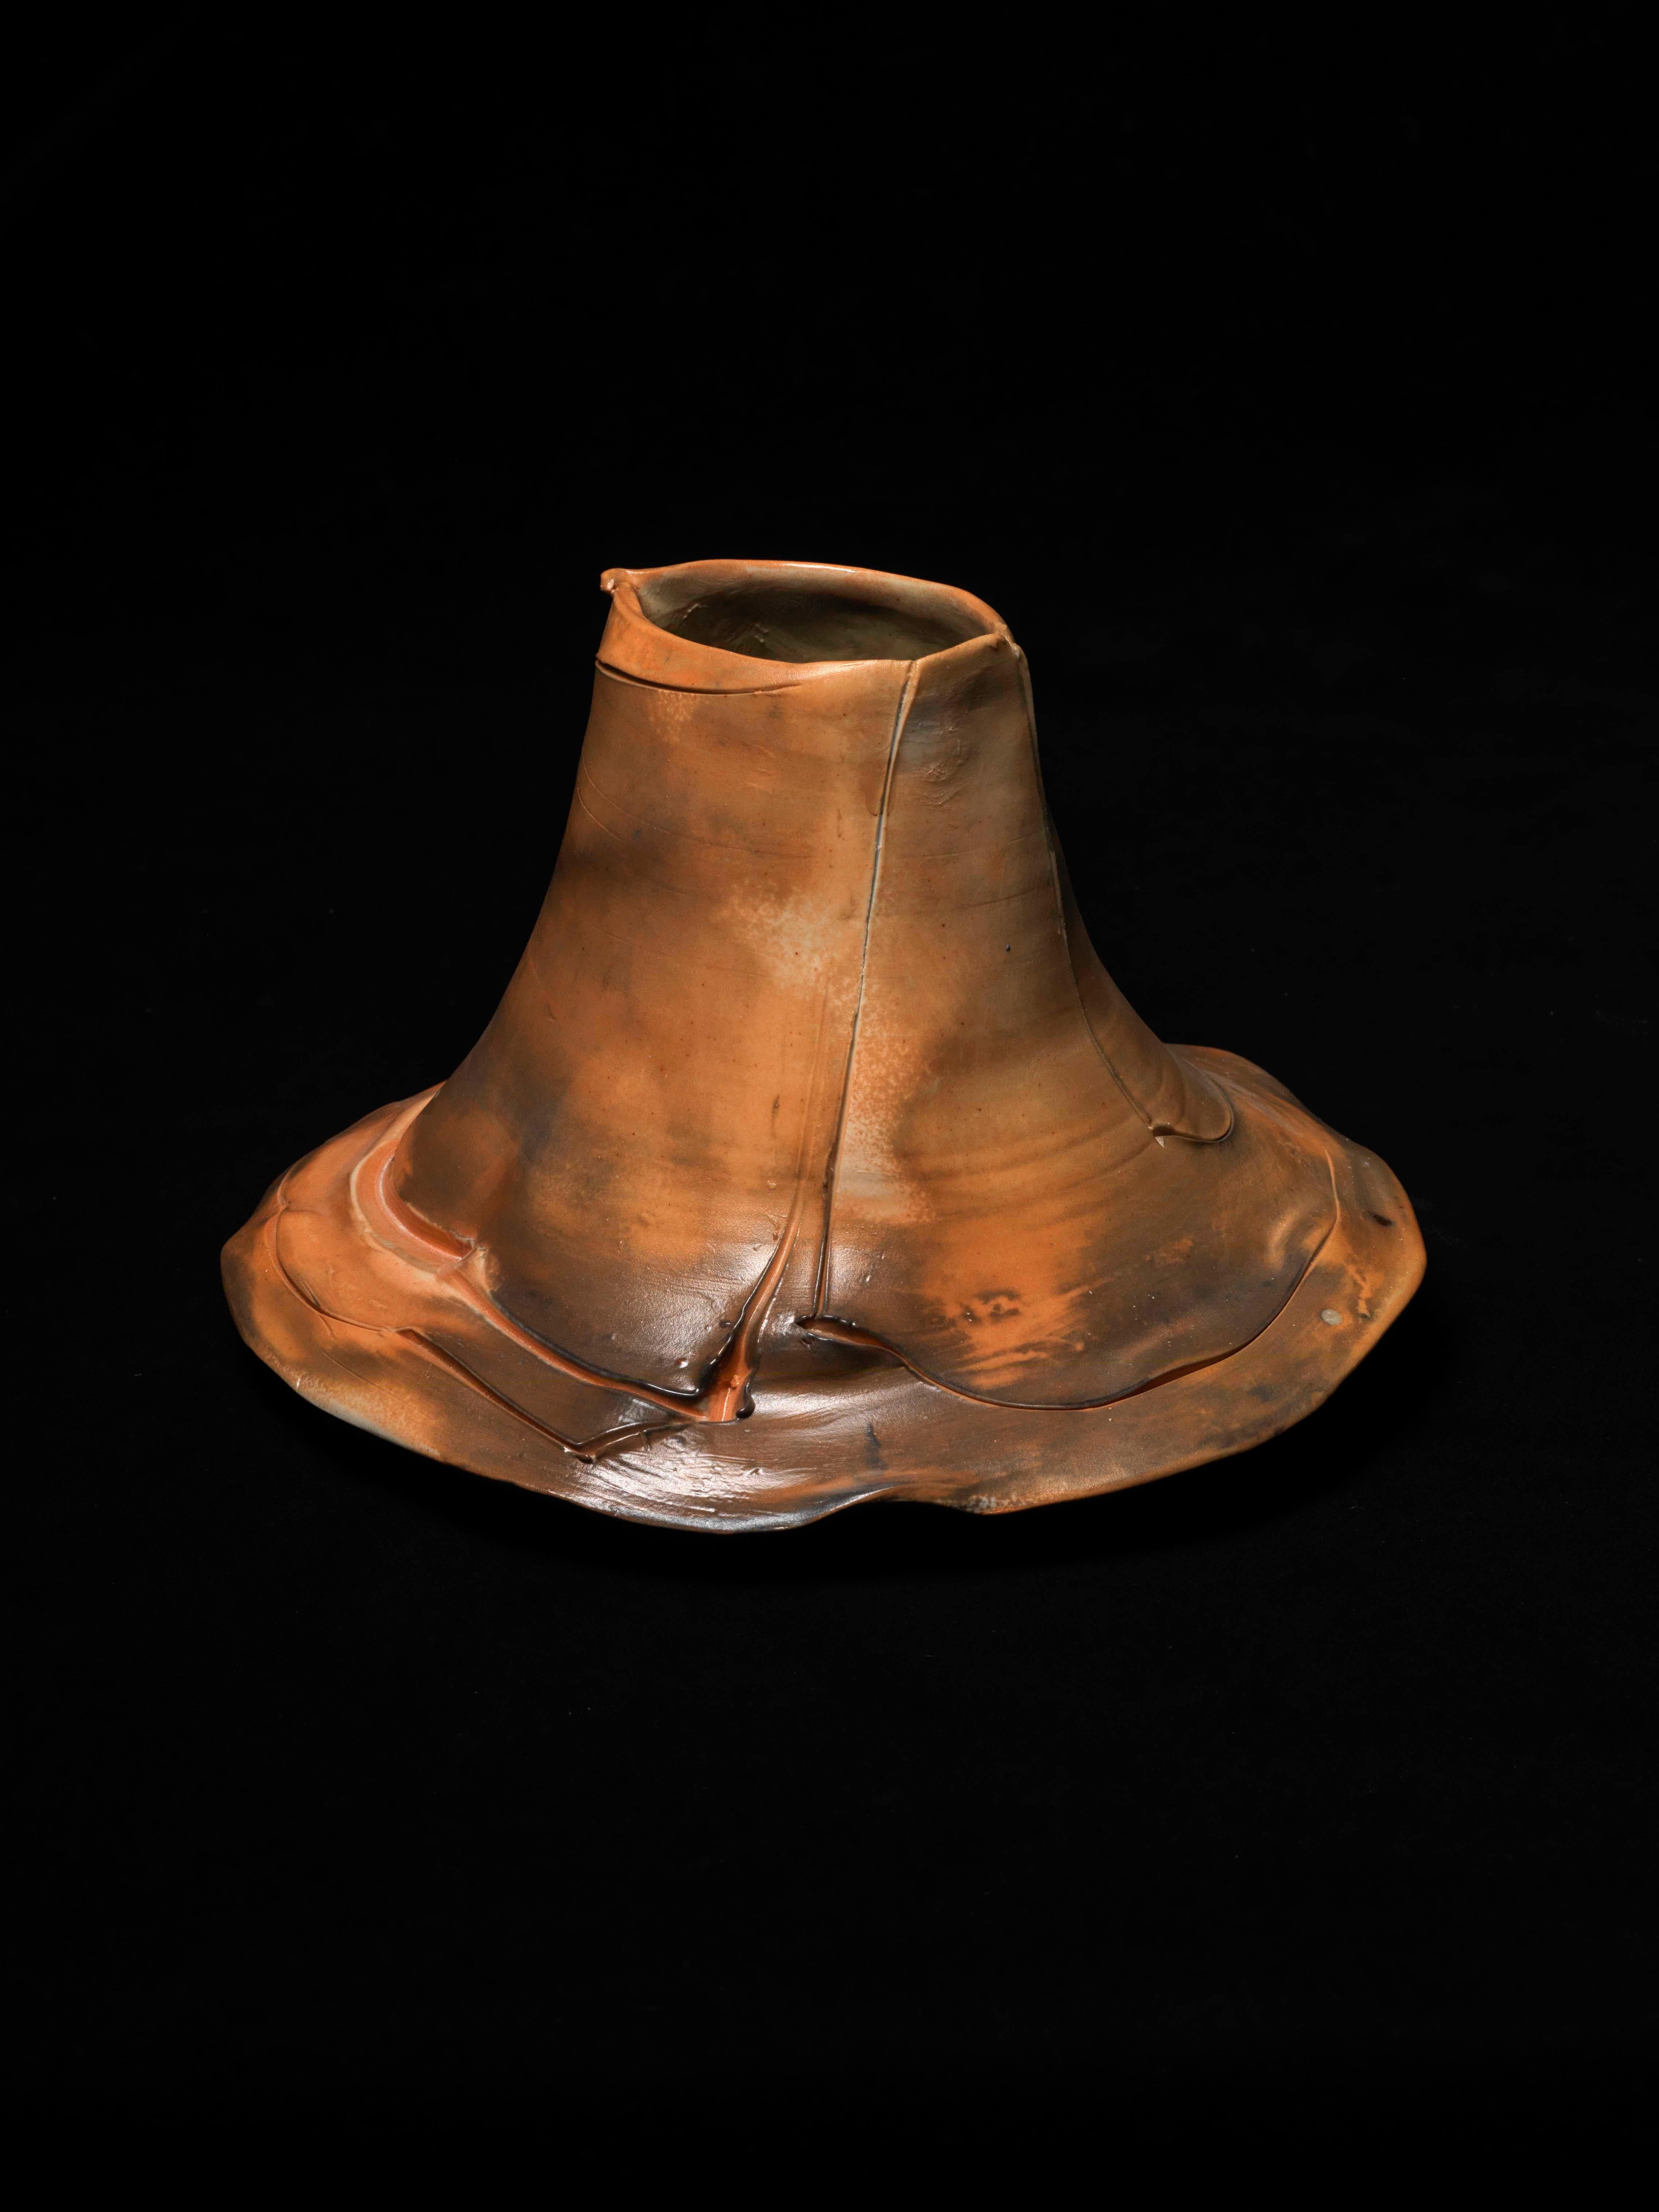 Neil Tetkowski Abstract Sculpture - Ceramic Texture Vessel Sculpture Abstract